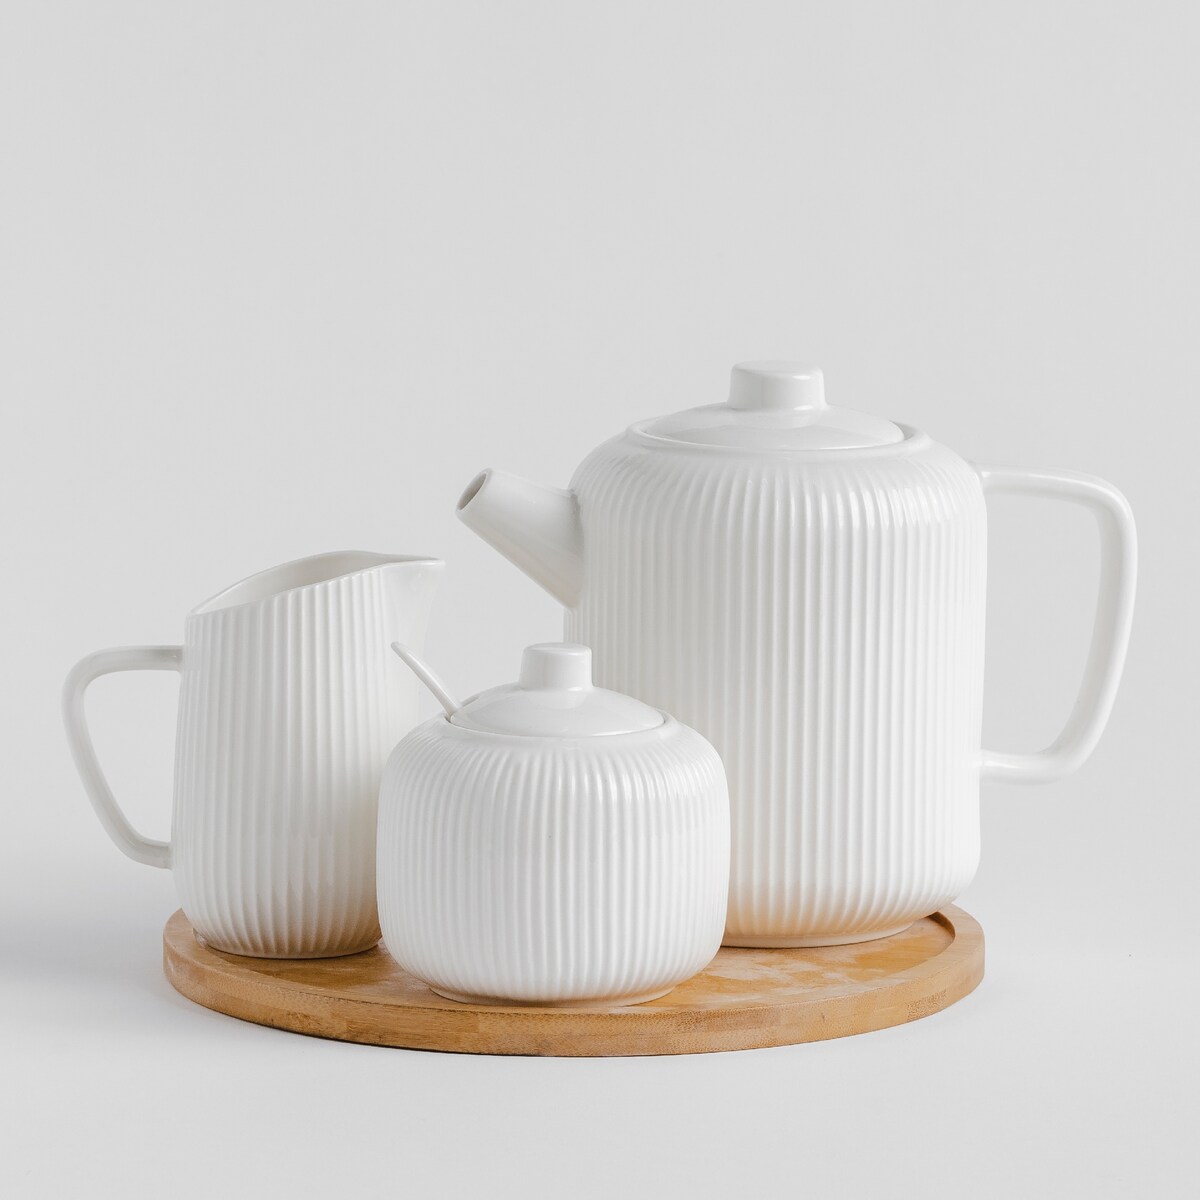 Teapot With Sugar Bowl And Milk Jug LINERS 